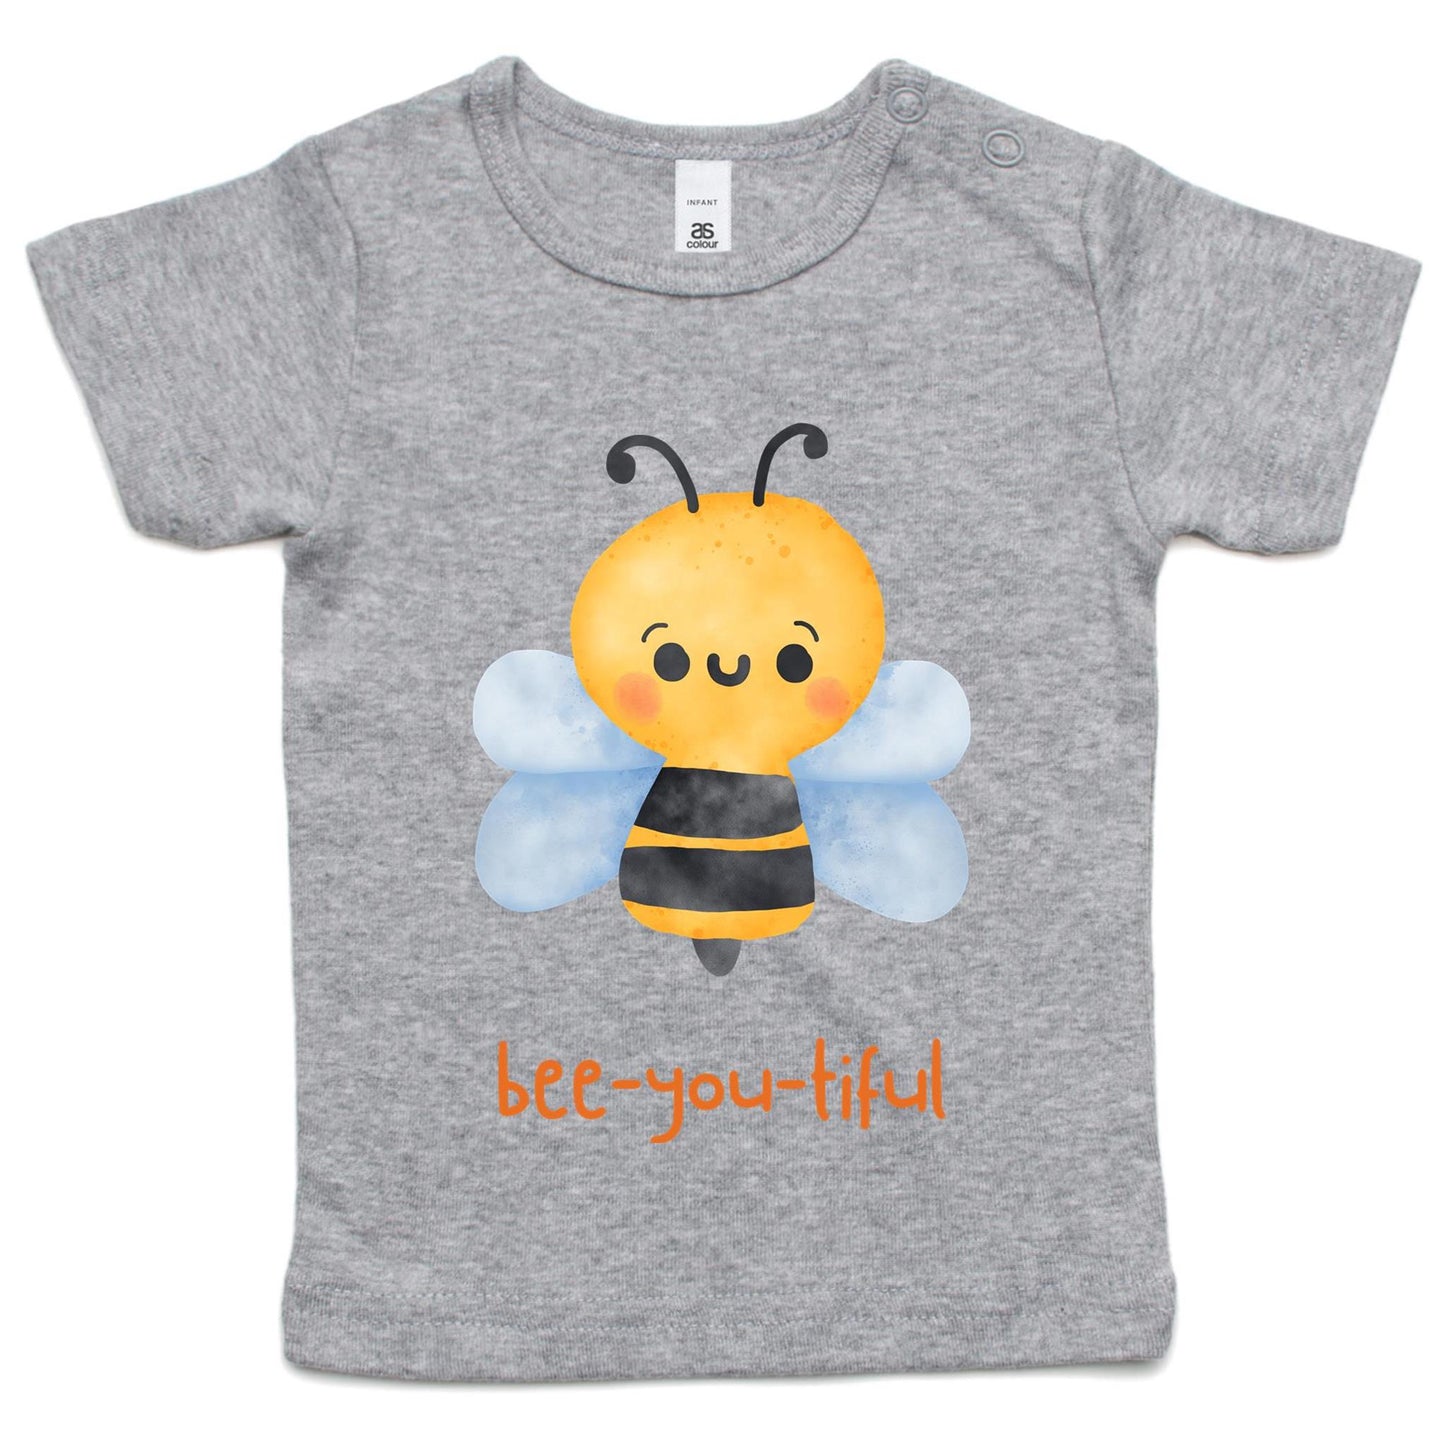 Bee-you-tiful - Baby T-shirt Grey Marle Baby T-shirt animal